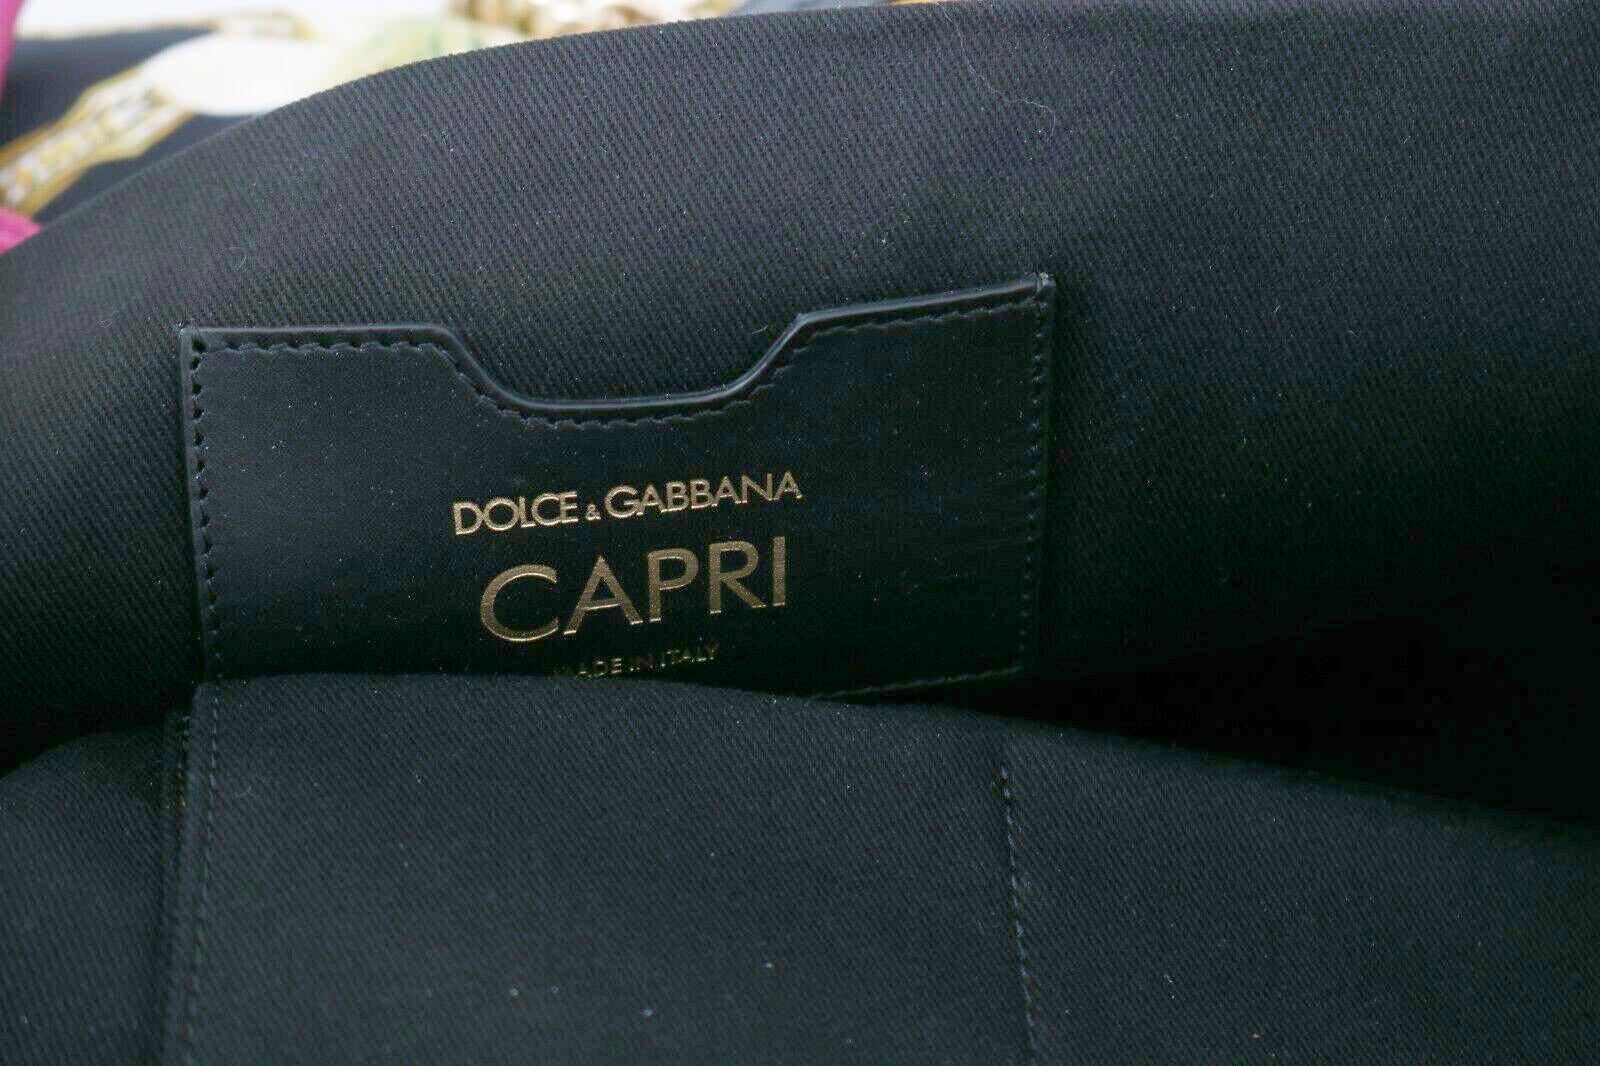 Dolce & Gabbana Black Pink Cotton Floral Porto Cervo Capri Tote Bag Handbag 1